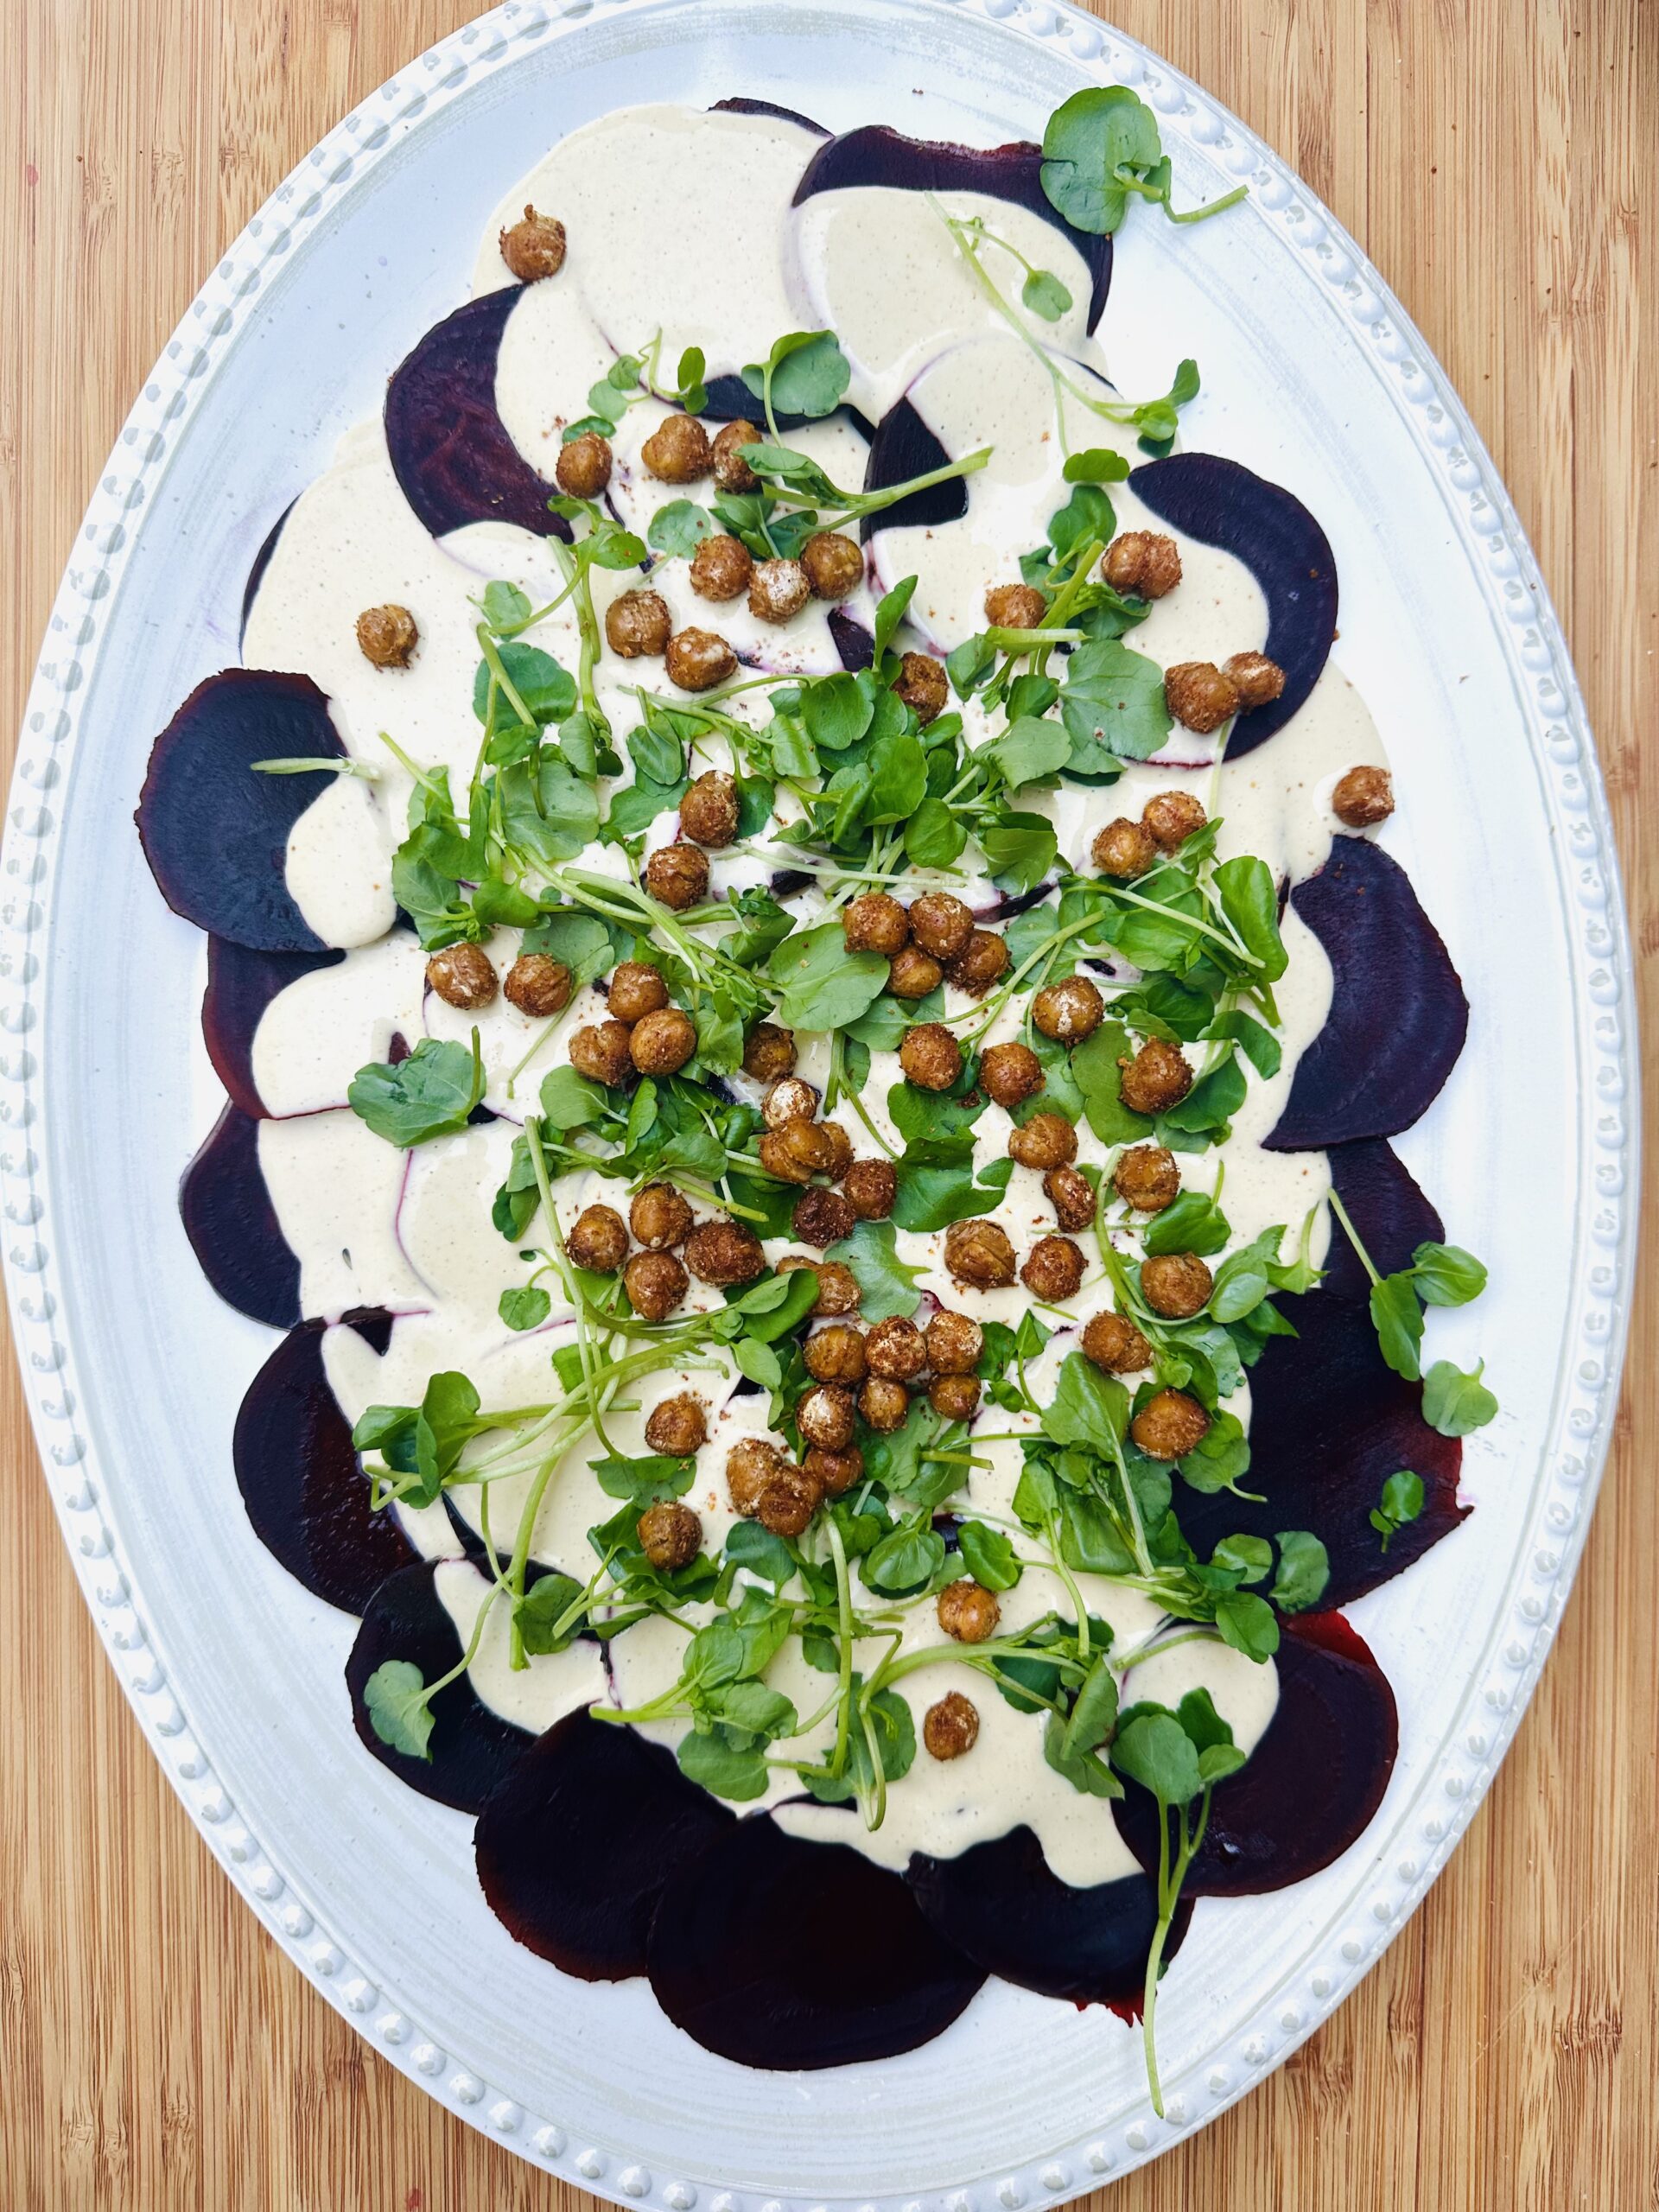 Beet Salad and Creamy Tahini Dressing by George Duran